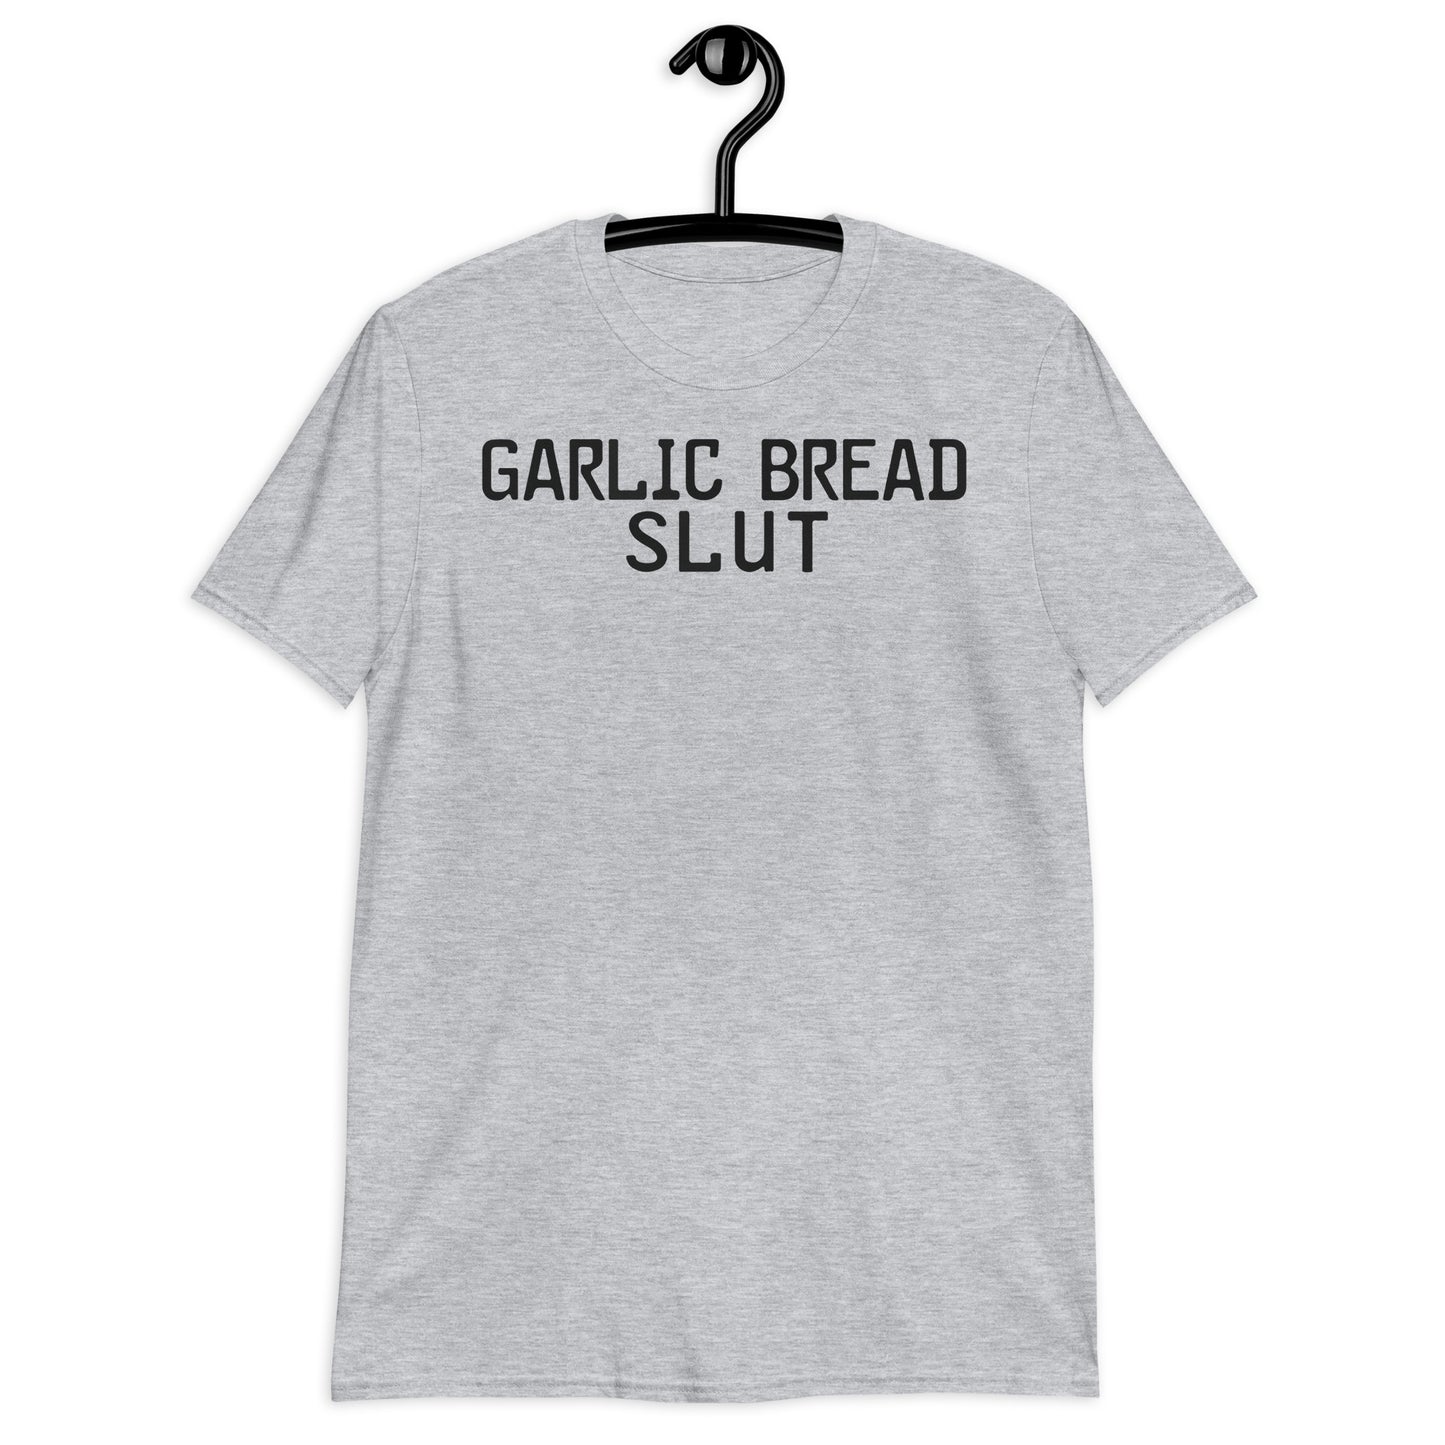 Garlic Bread Slut. Short-Sleeve Unisex T-Shirt